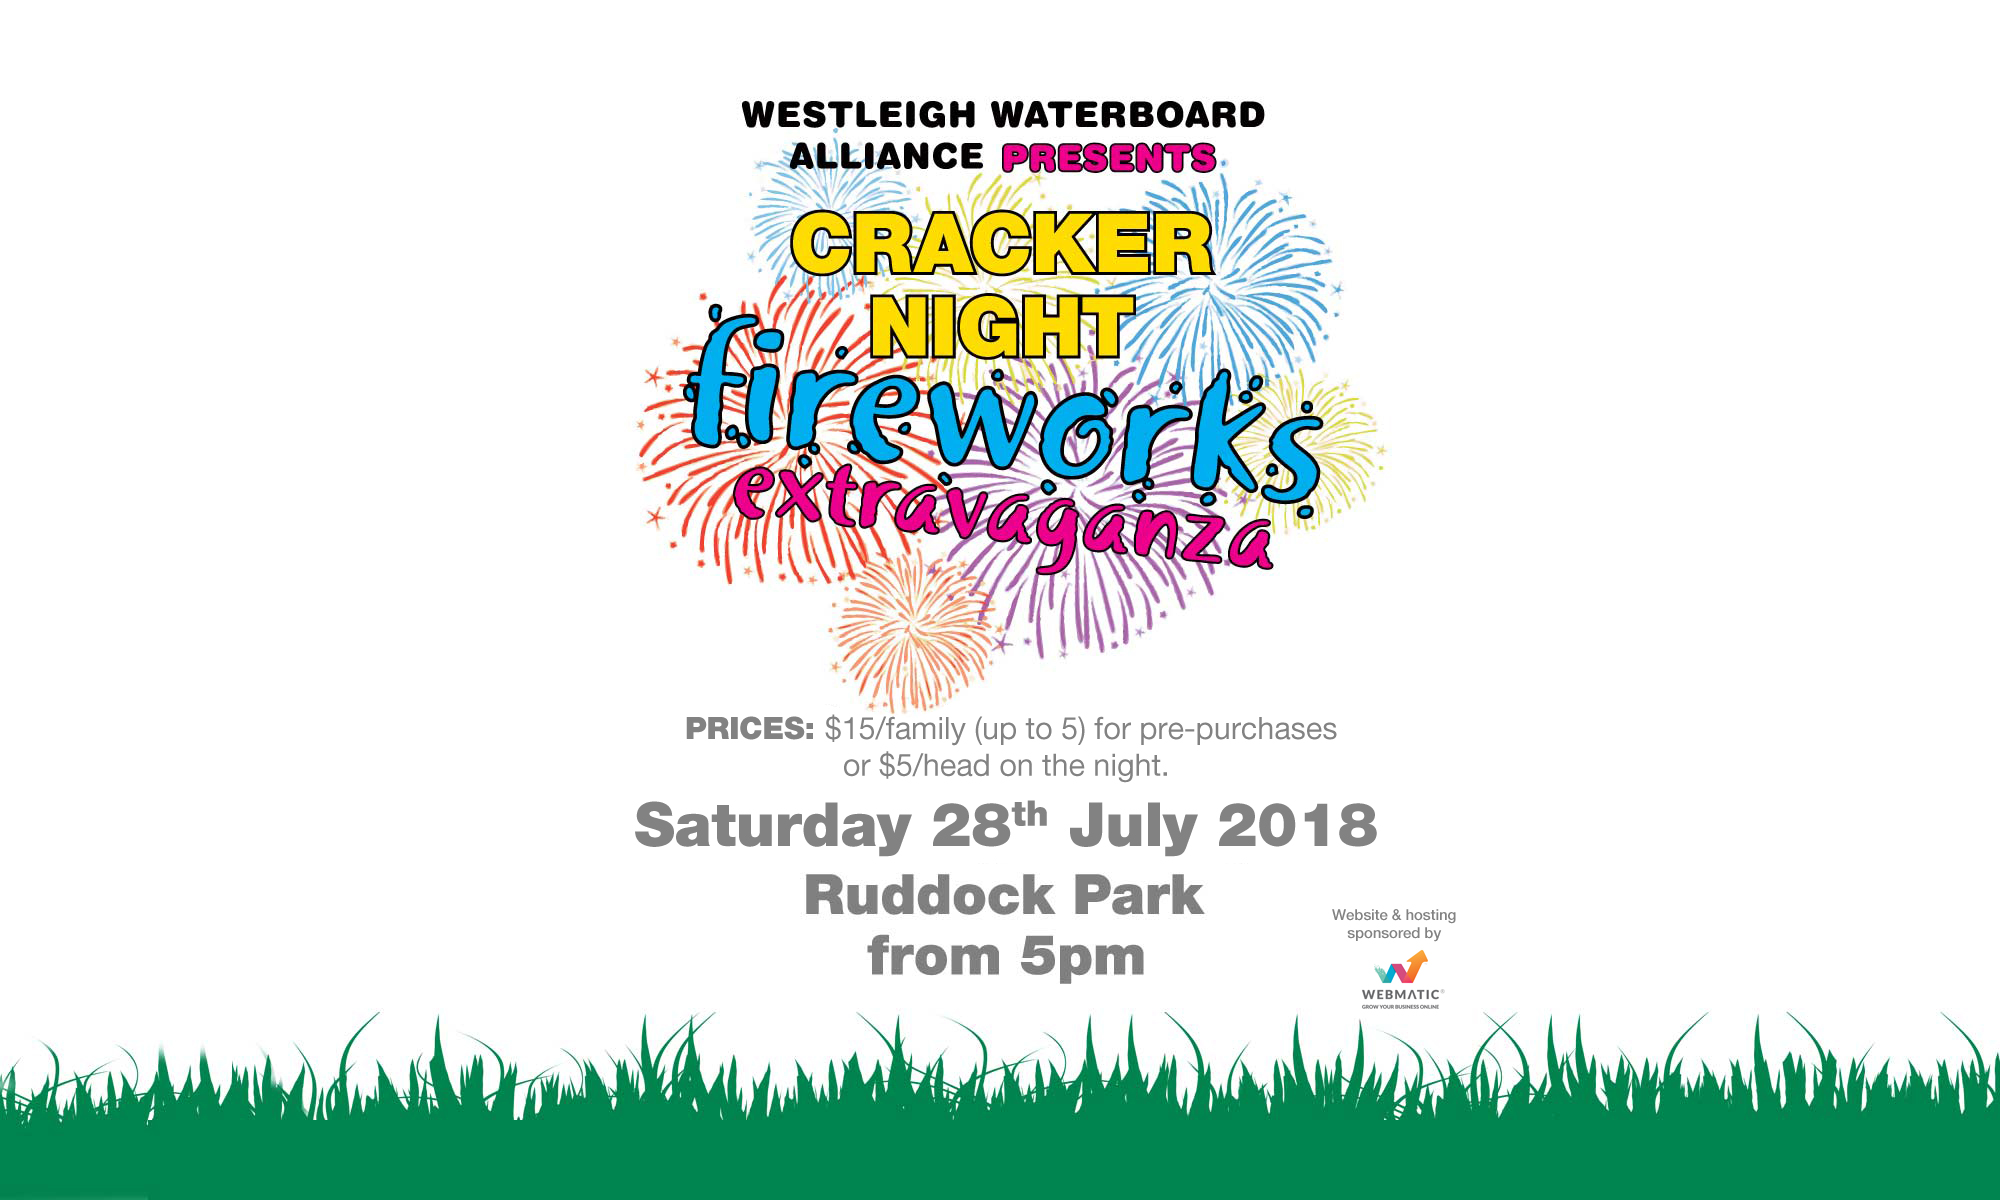 Westleigh Waterboard alliance Presents CRACKER NIGHT Fireworks extravaganza. Sat 28 July 2018. Ruddock park, from 5pm